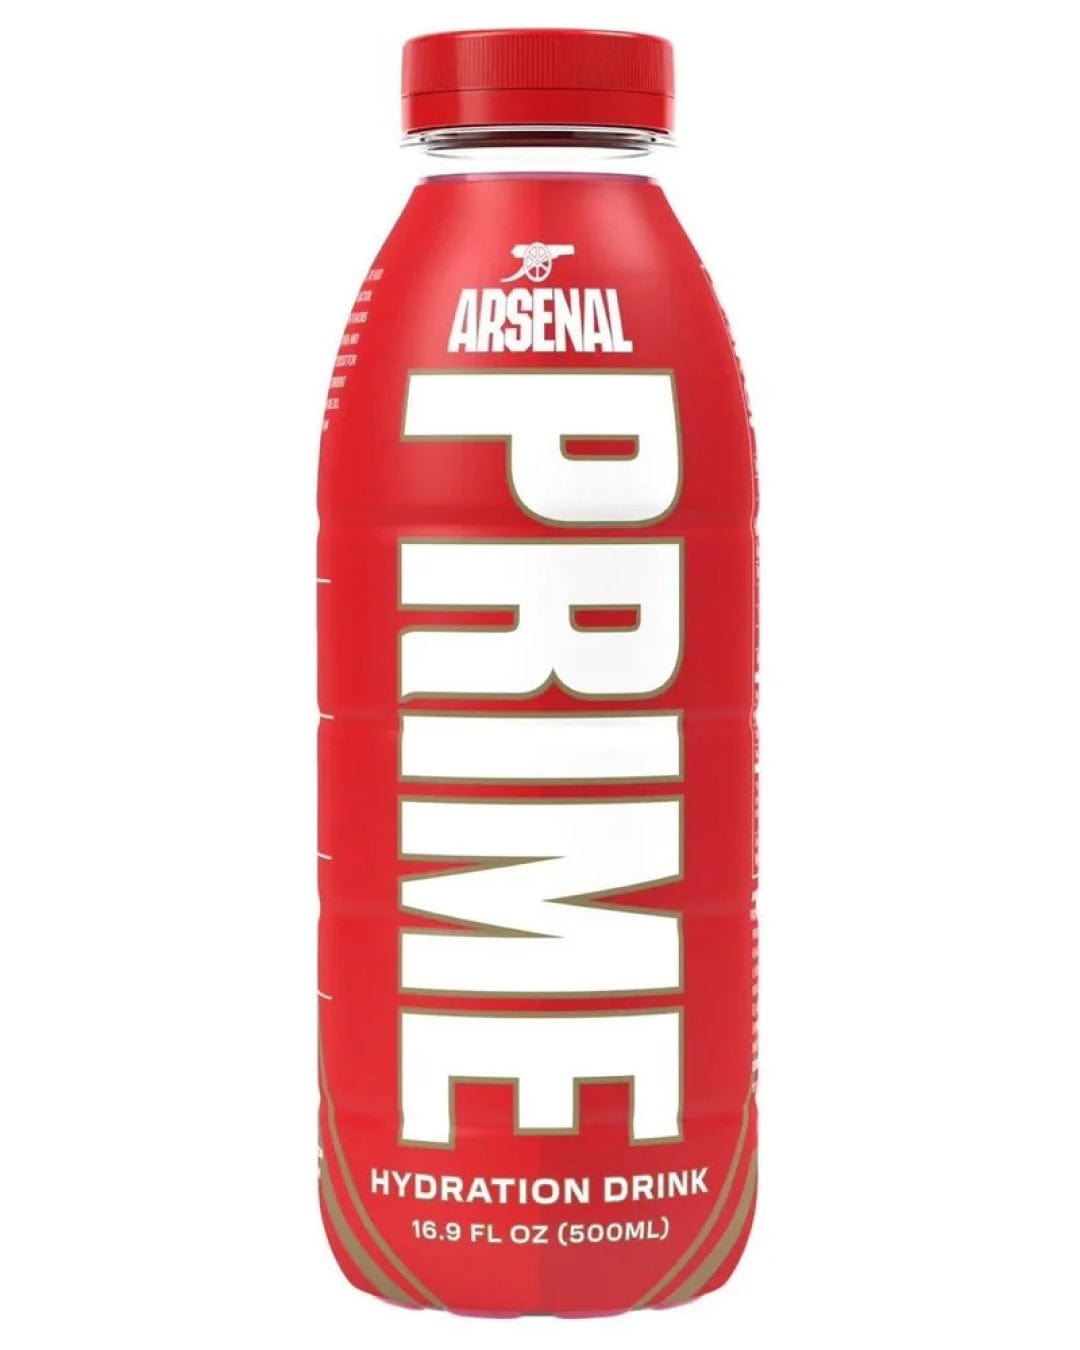 Prime Arsenal Hydration Drink, 500 ml Spirits